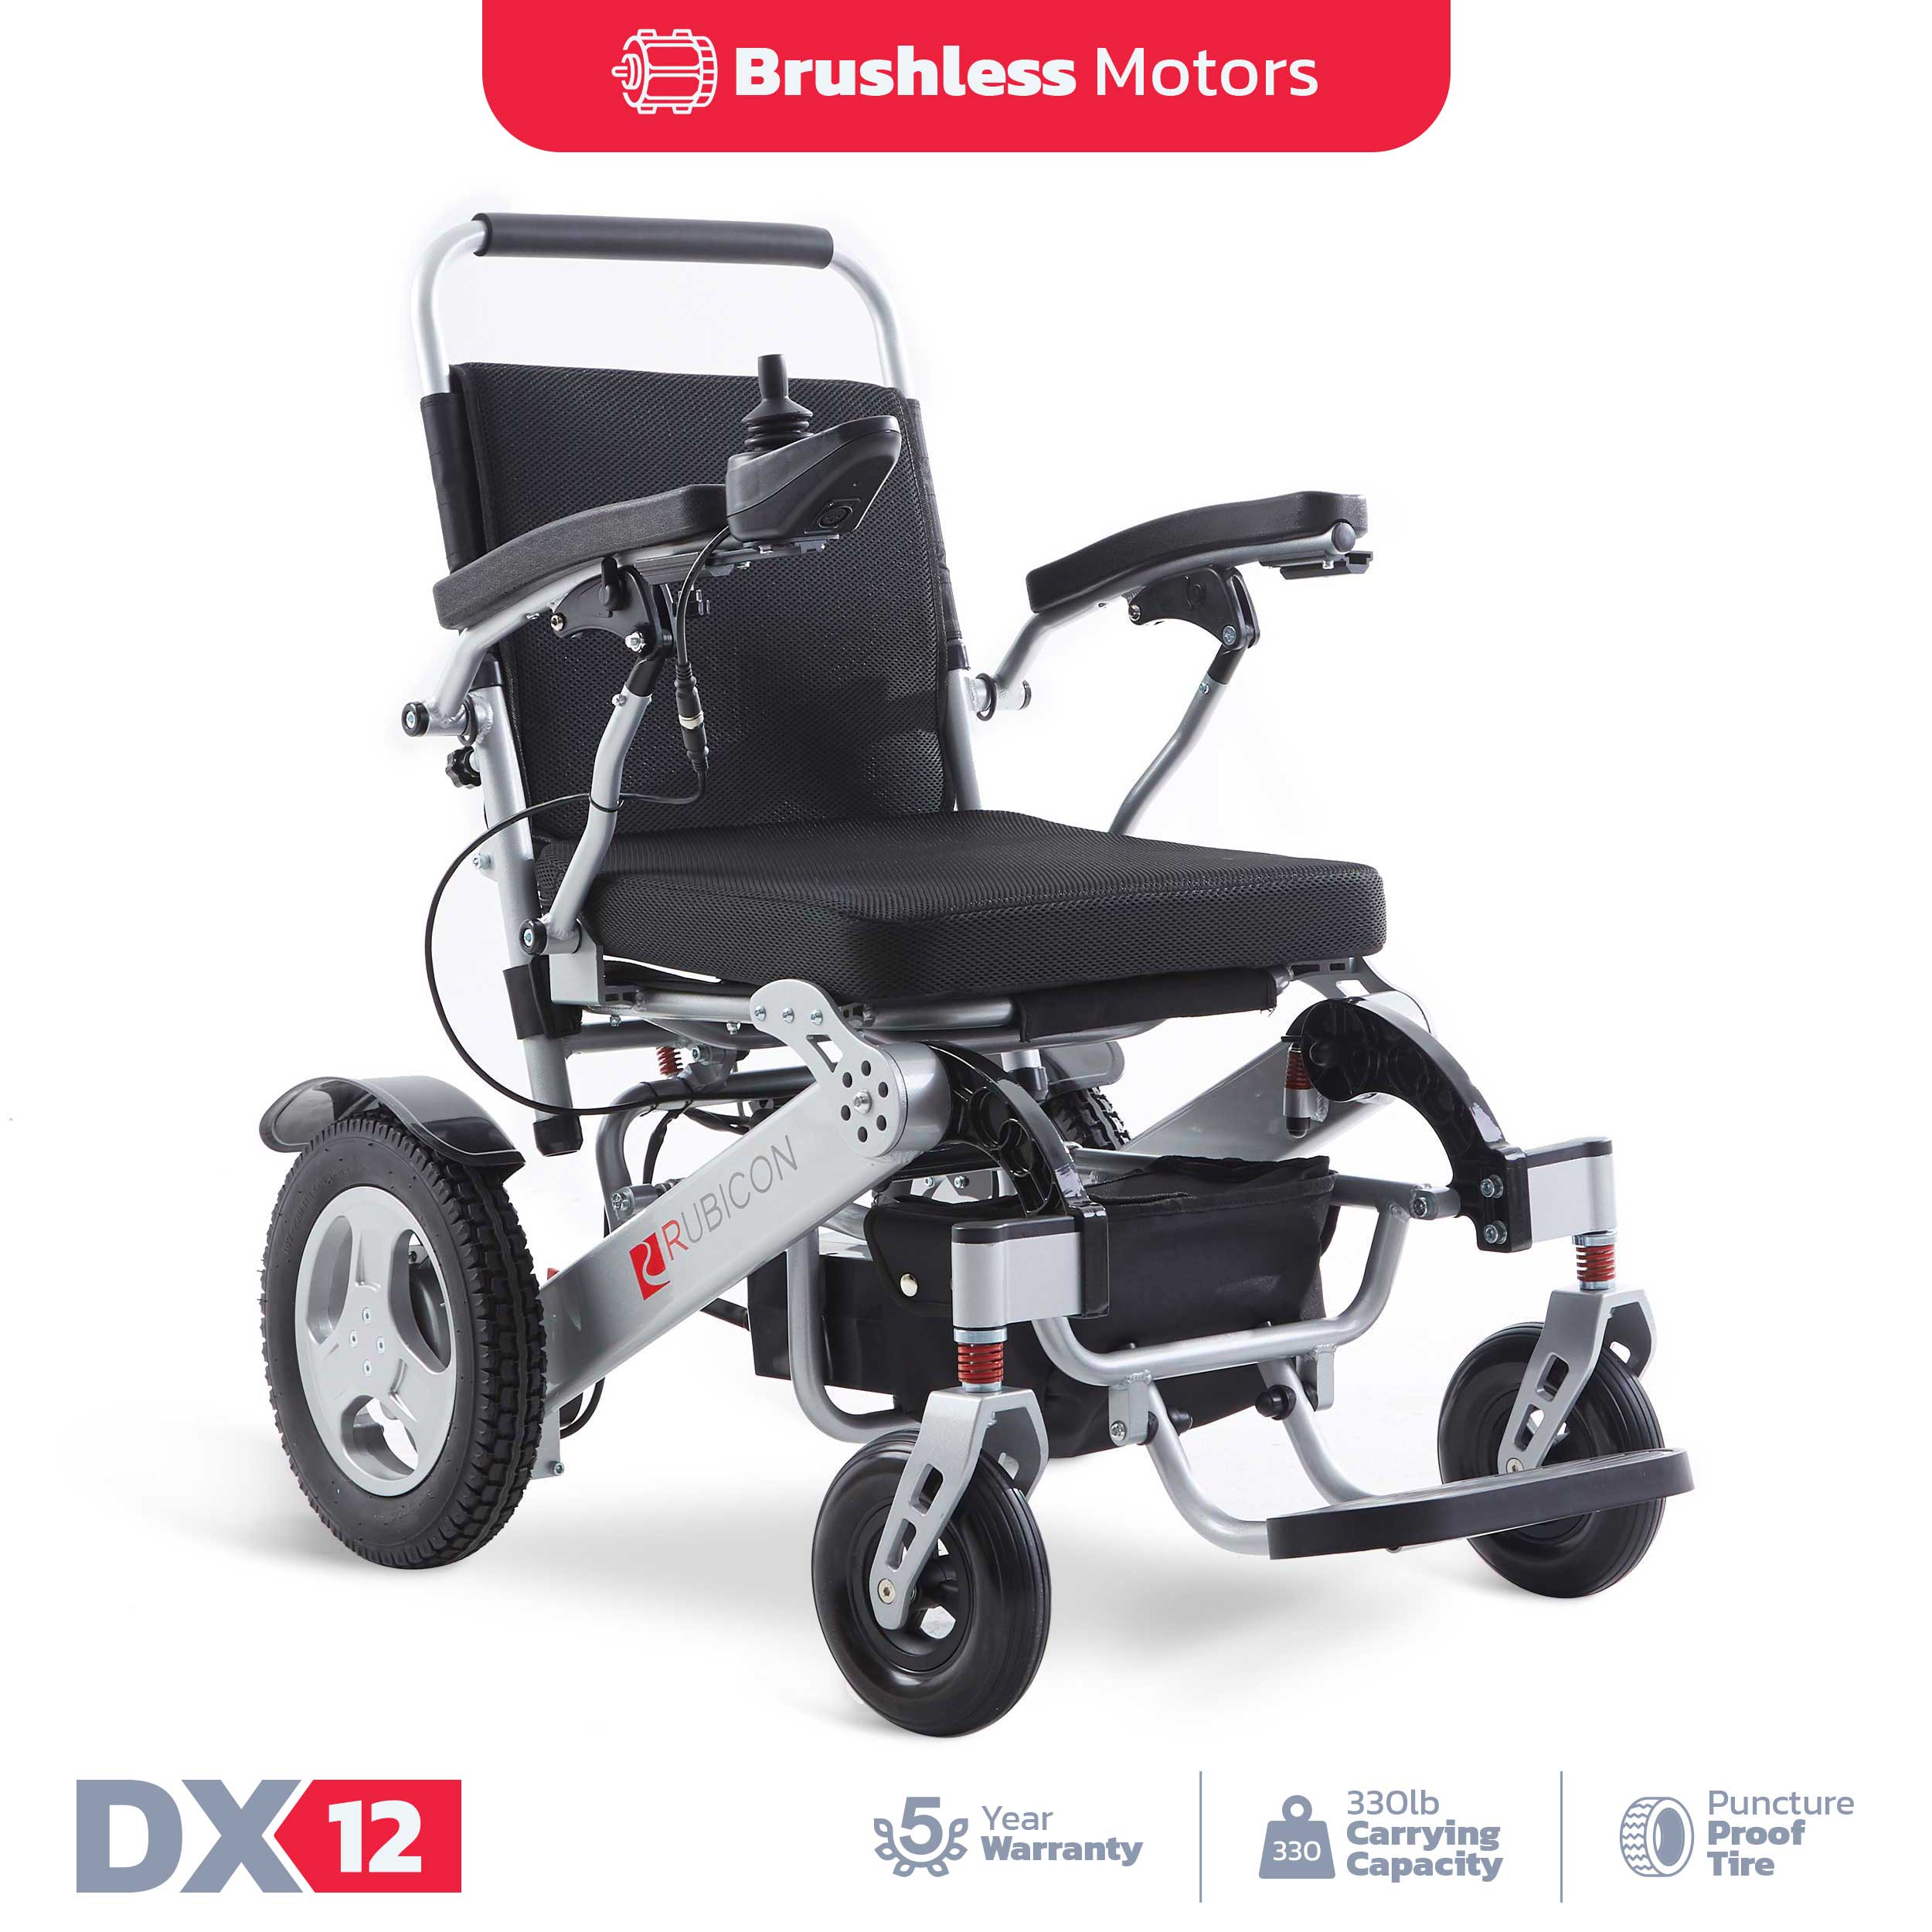 Rubicon DX12 - Brushless Motors Premium Electric Wheelchair